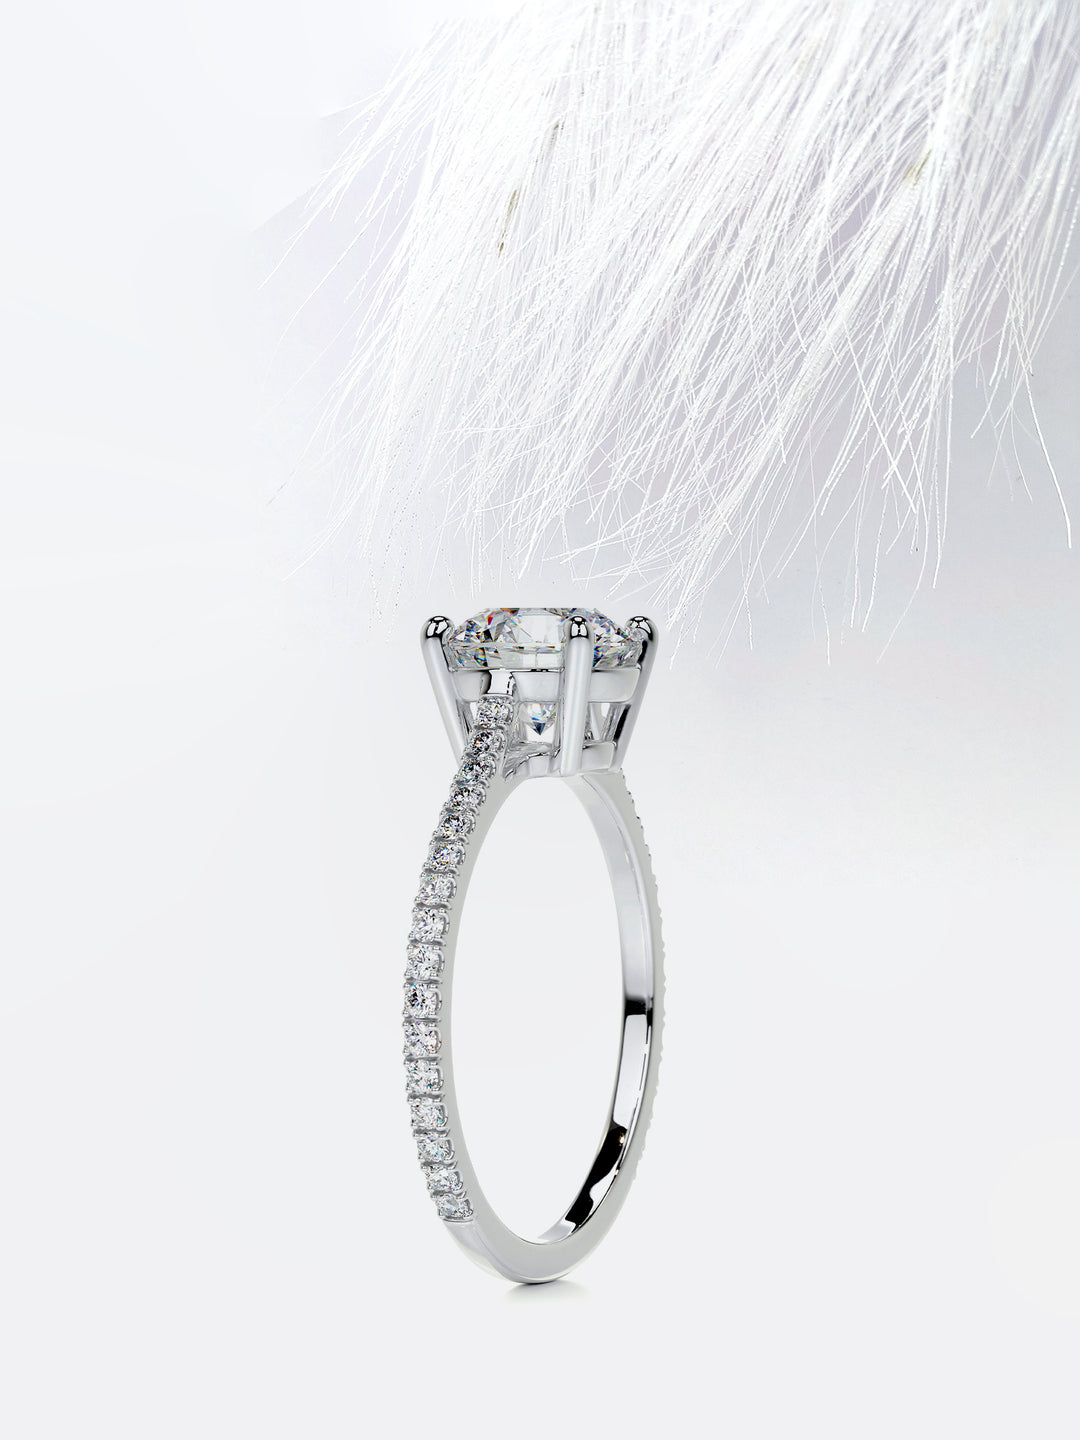 2.0CT Round Cut Moissanite Diamond Pave Set Engagement Ring